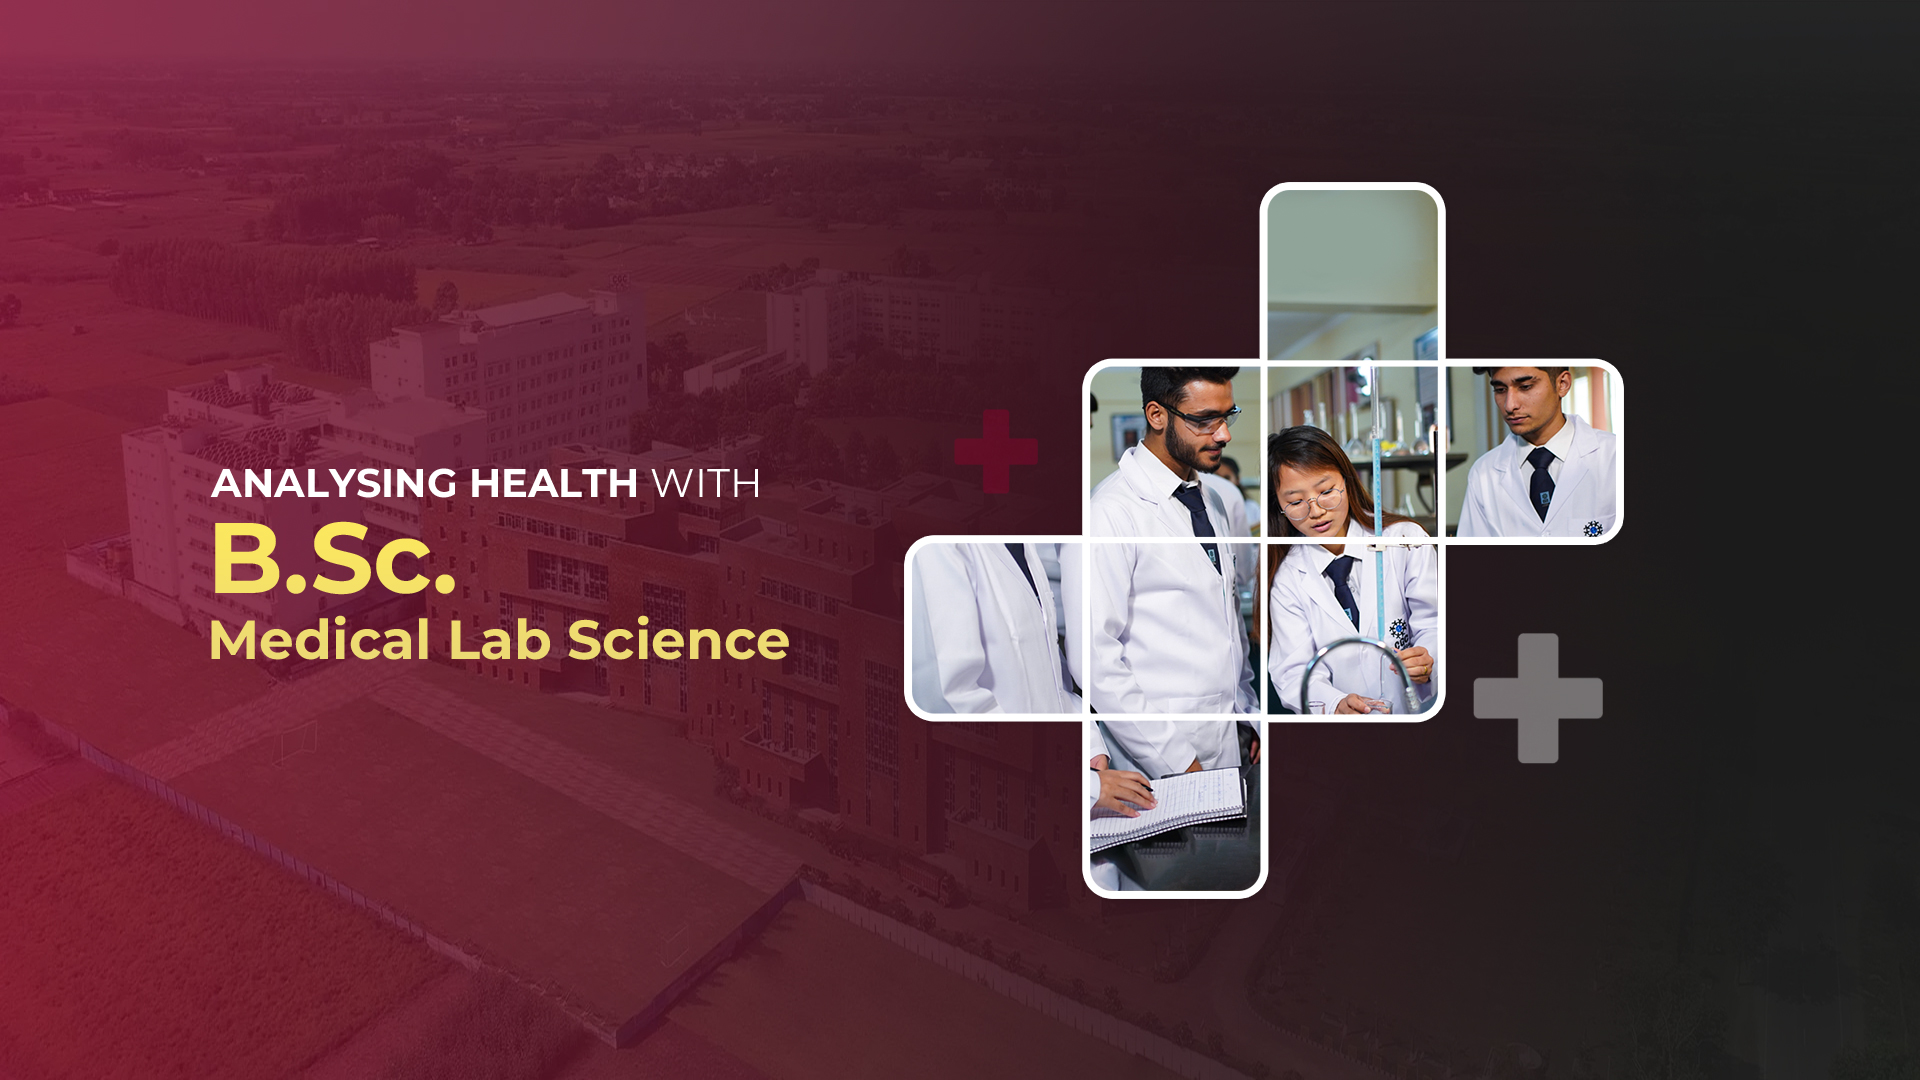 B.Sc. Medical Laboratory Science